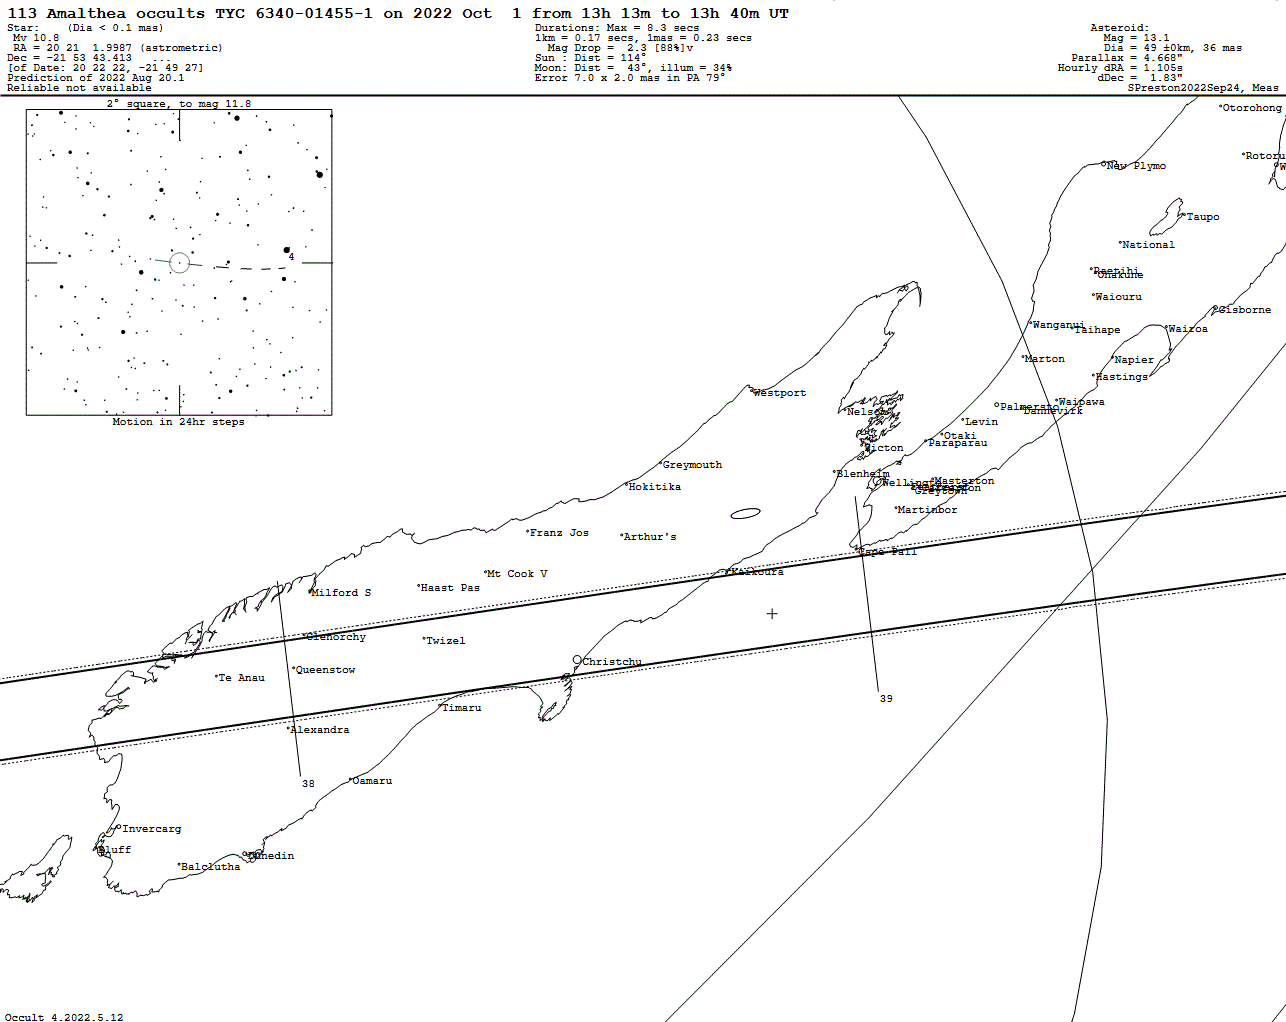 Amalthea Update Map